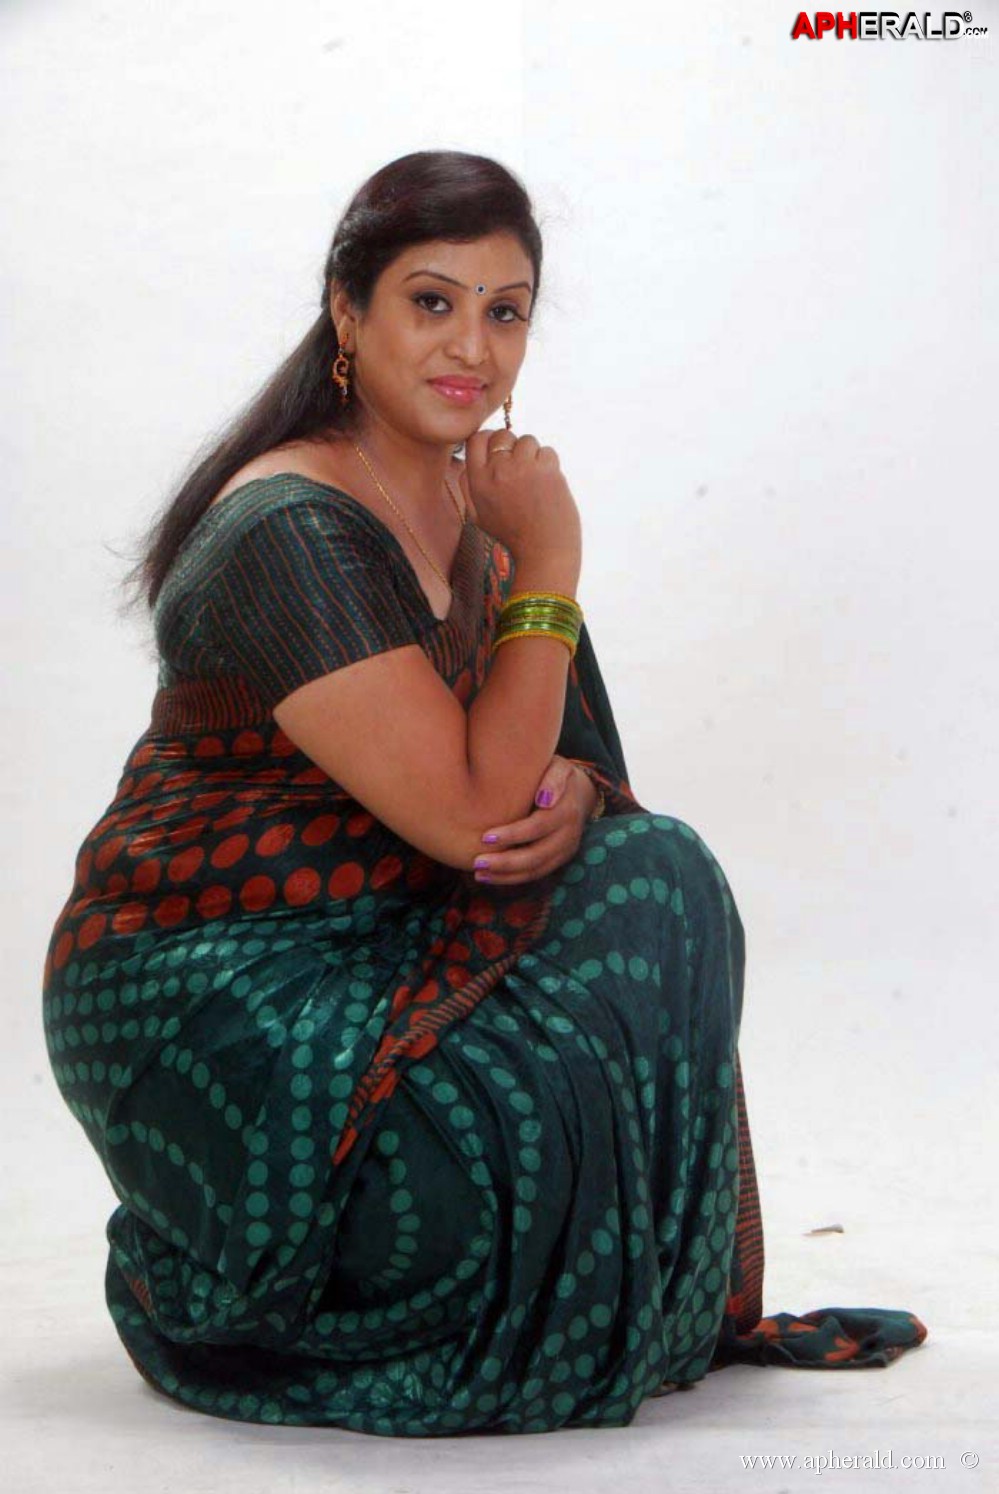 telugu side actress hot pics